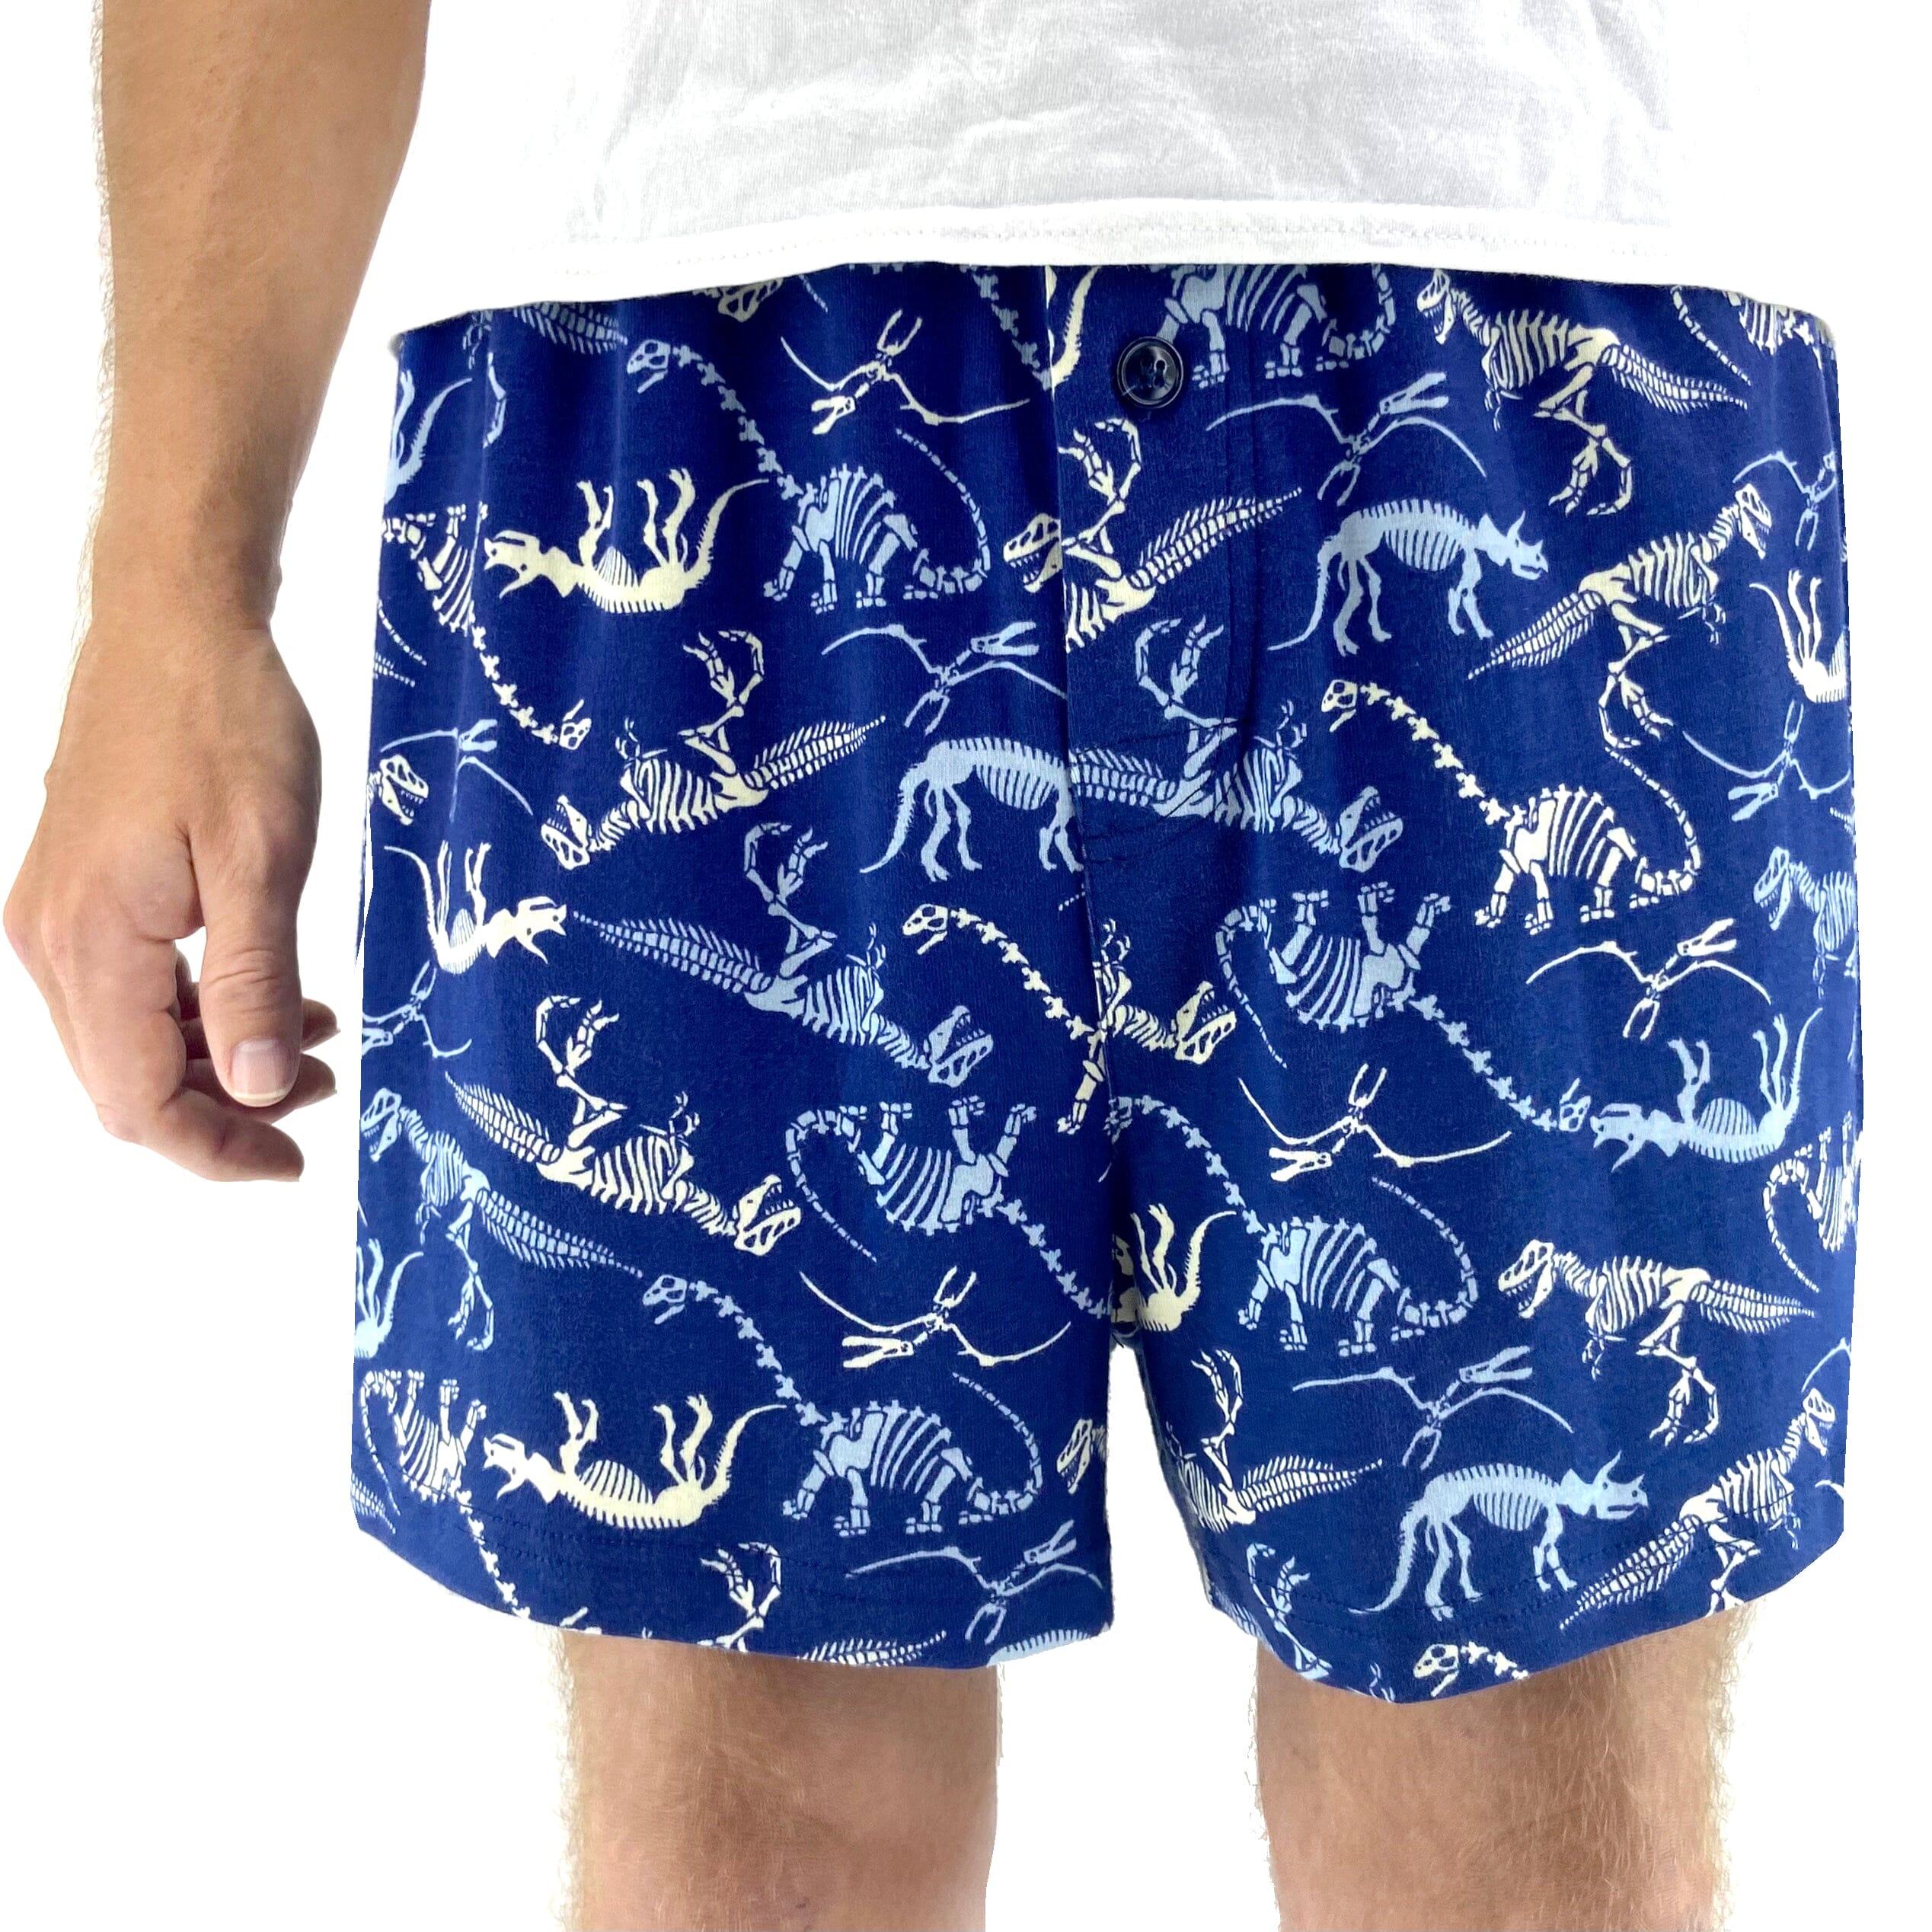 Men's Dinosaur Fossil All Over Print Cotton Knit Pyjama Sleep Shorts